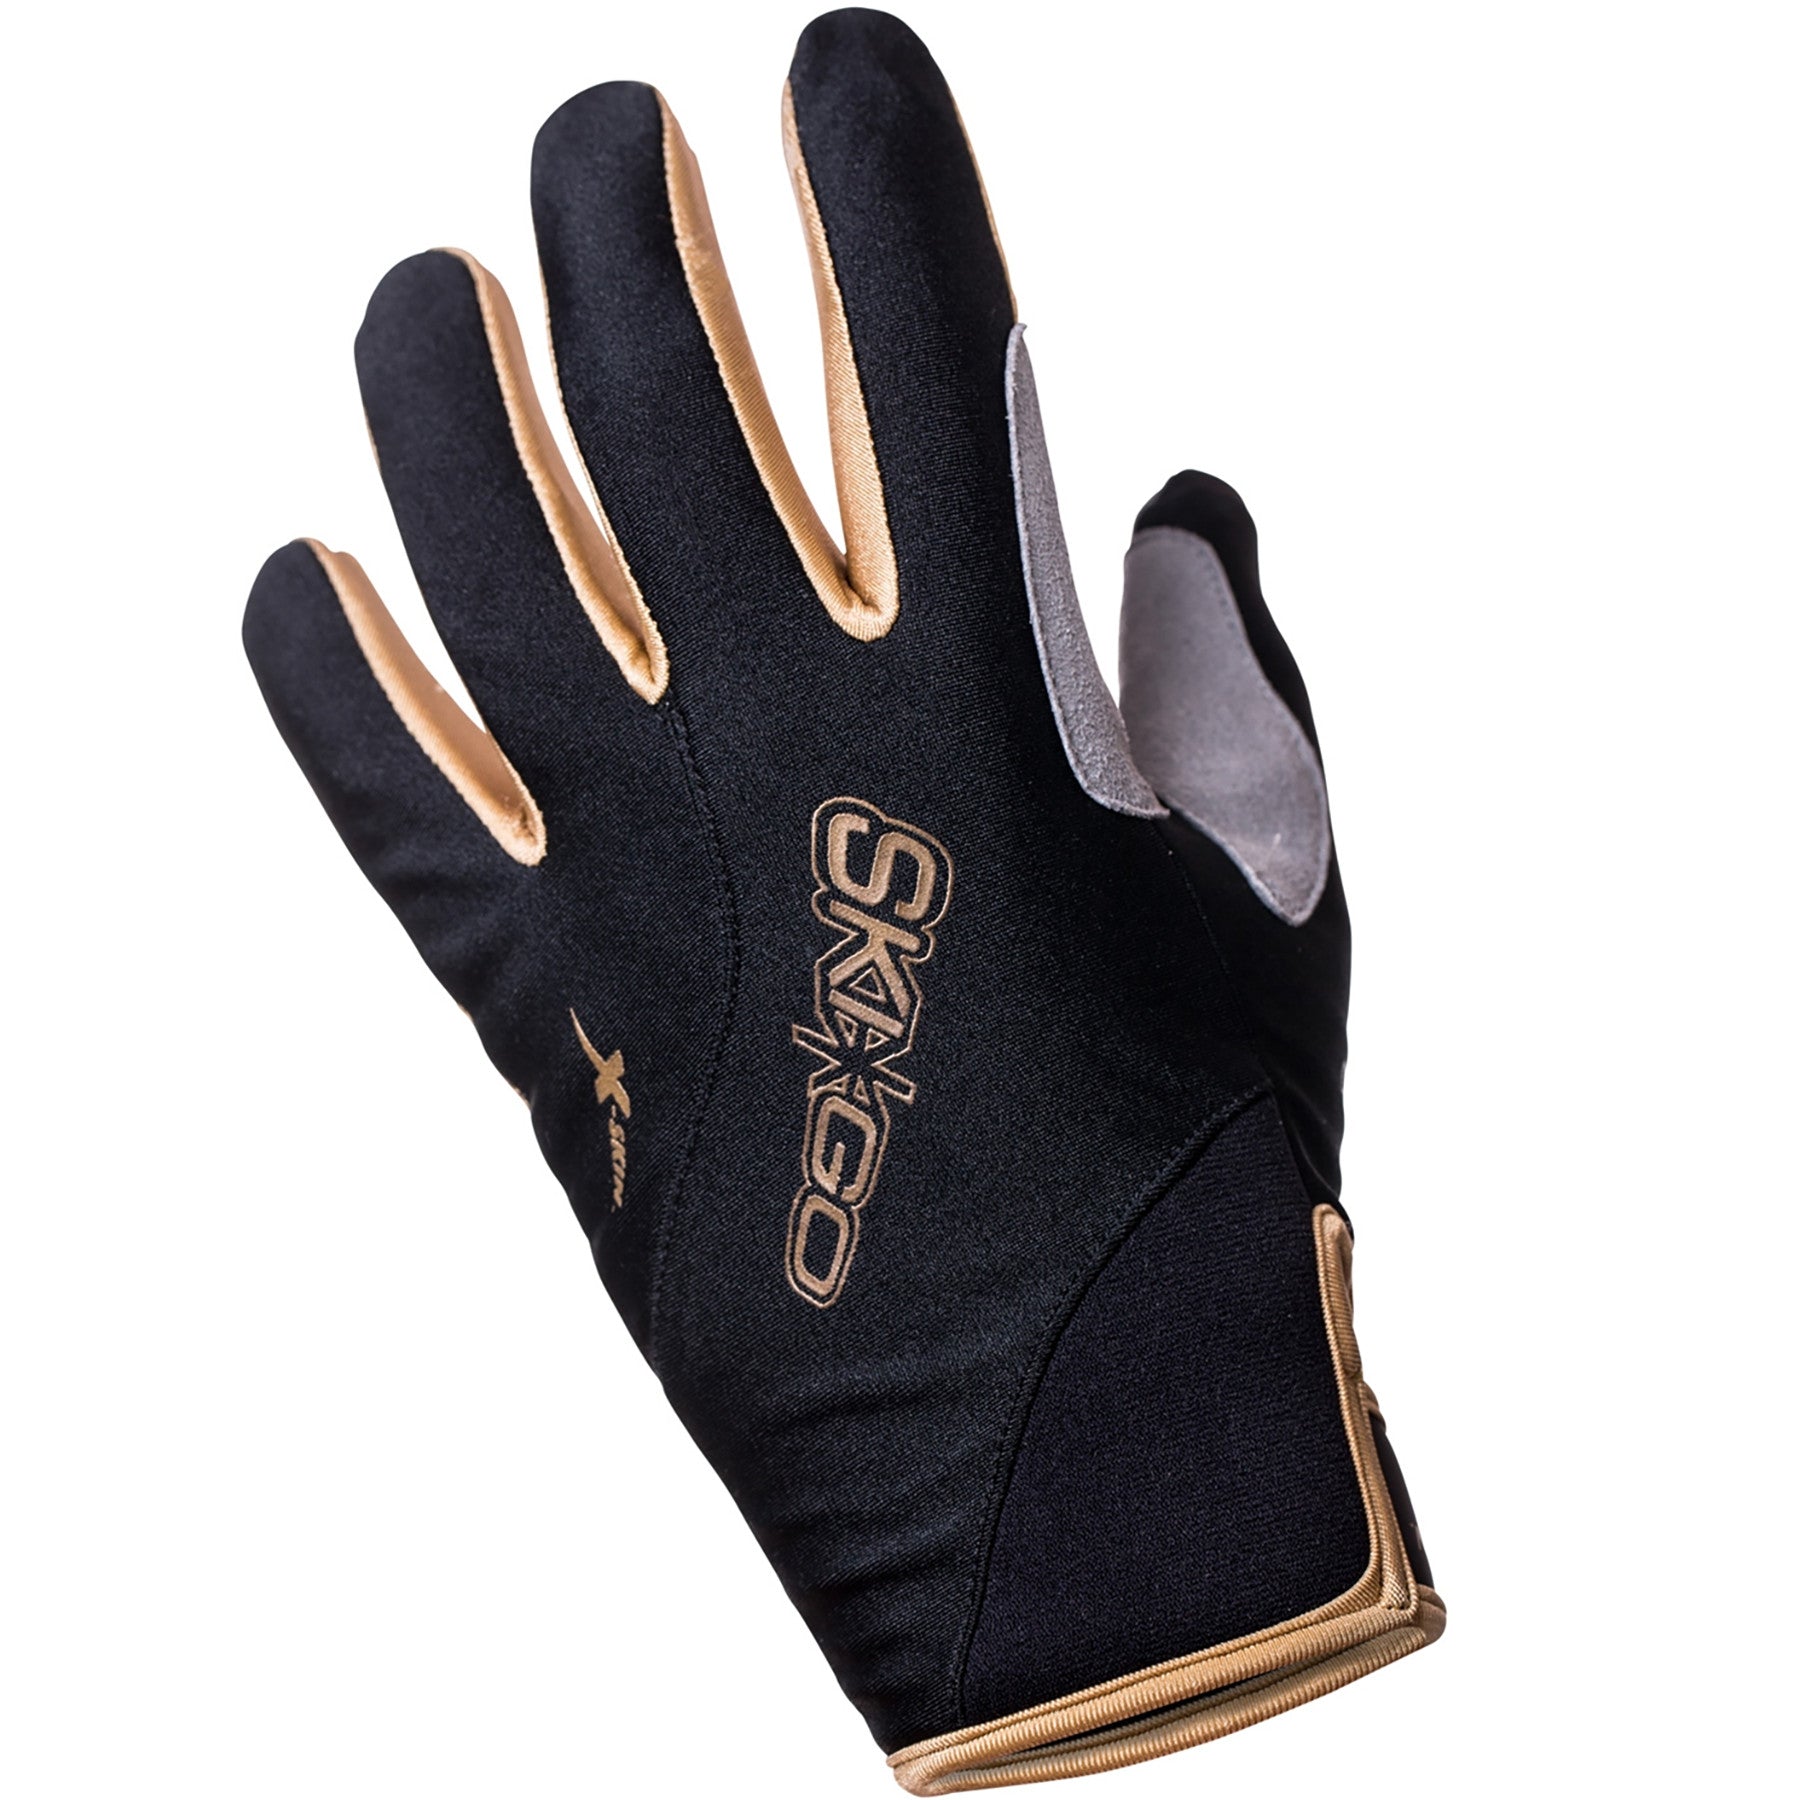 Skigo X-skin Glove 15-16